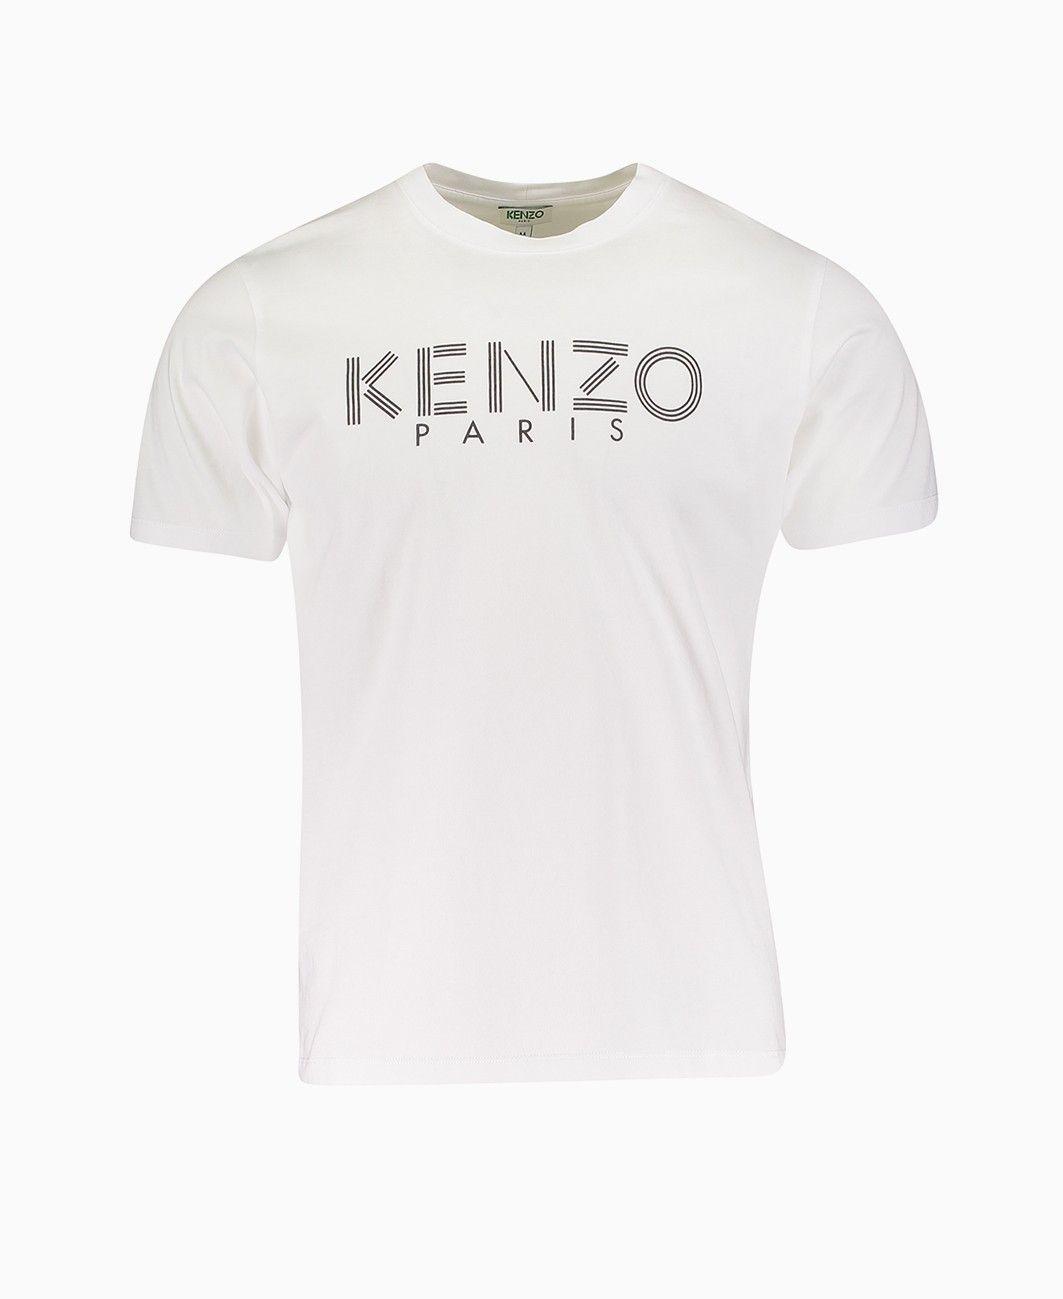 Kenzo Paris Logo